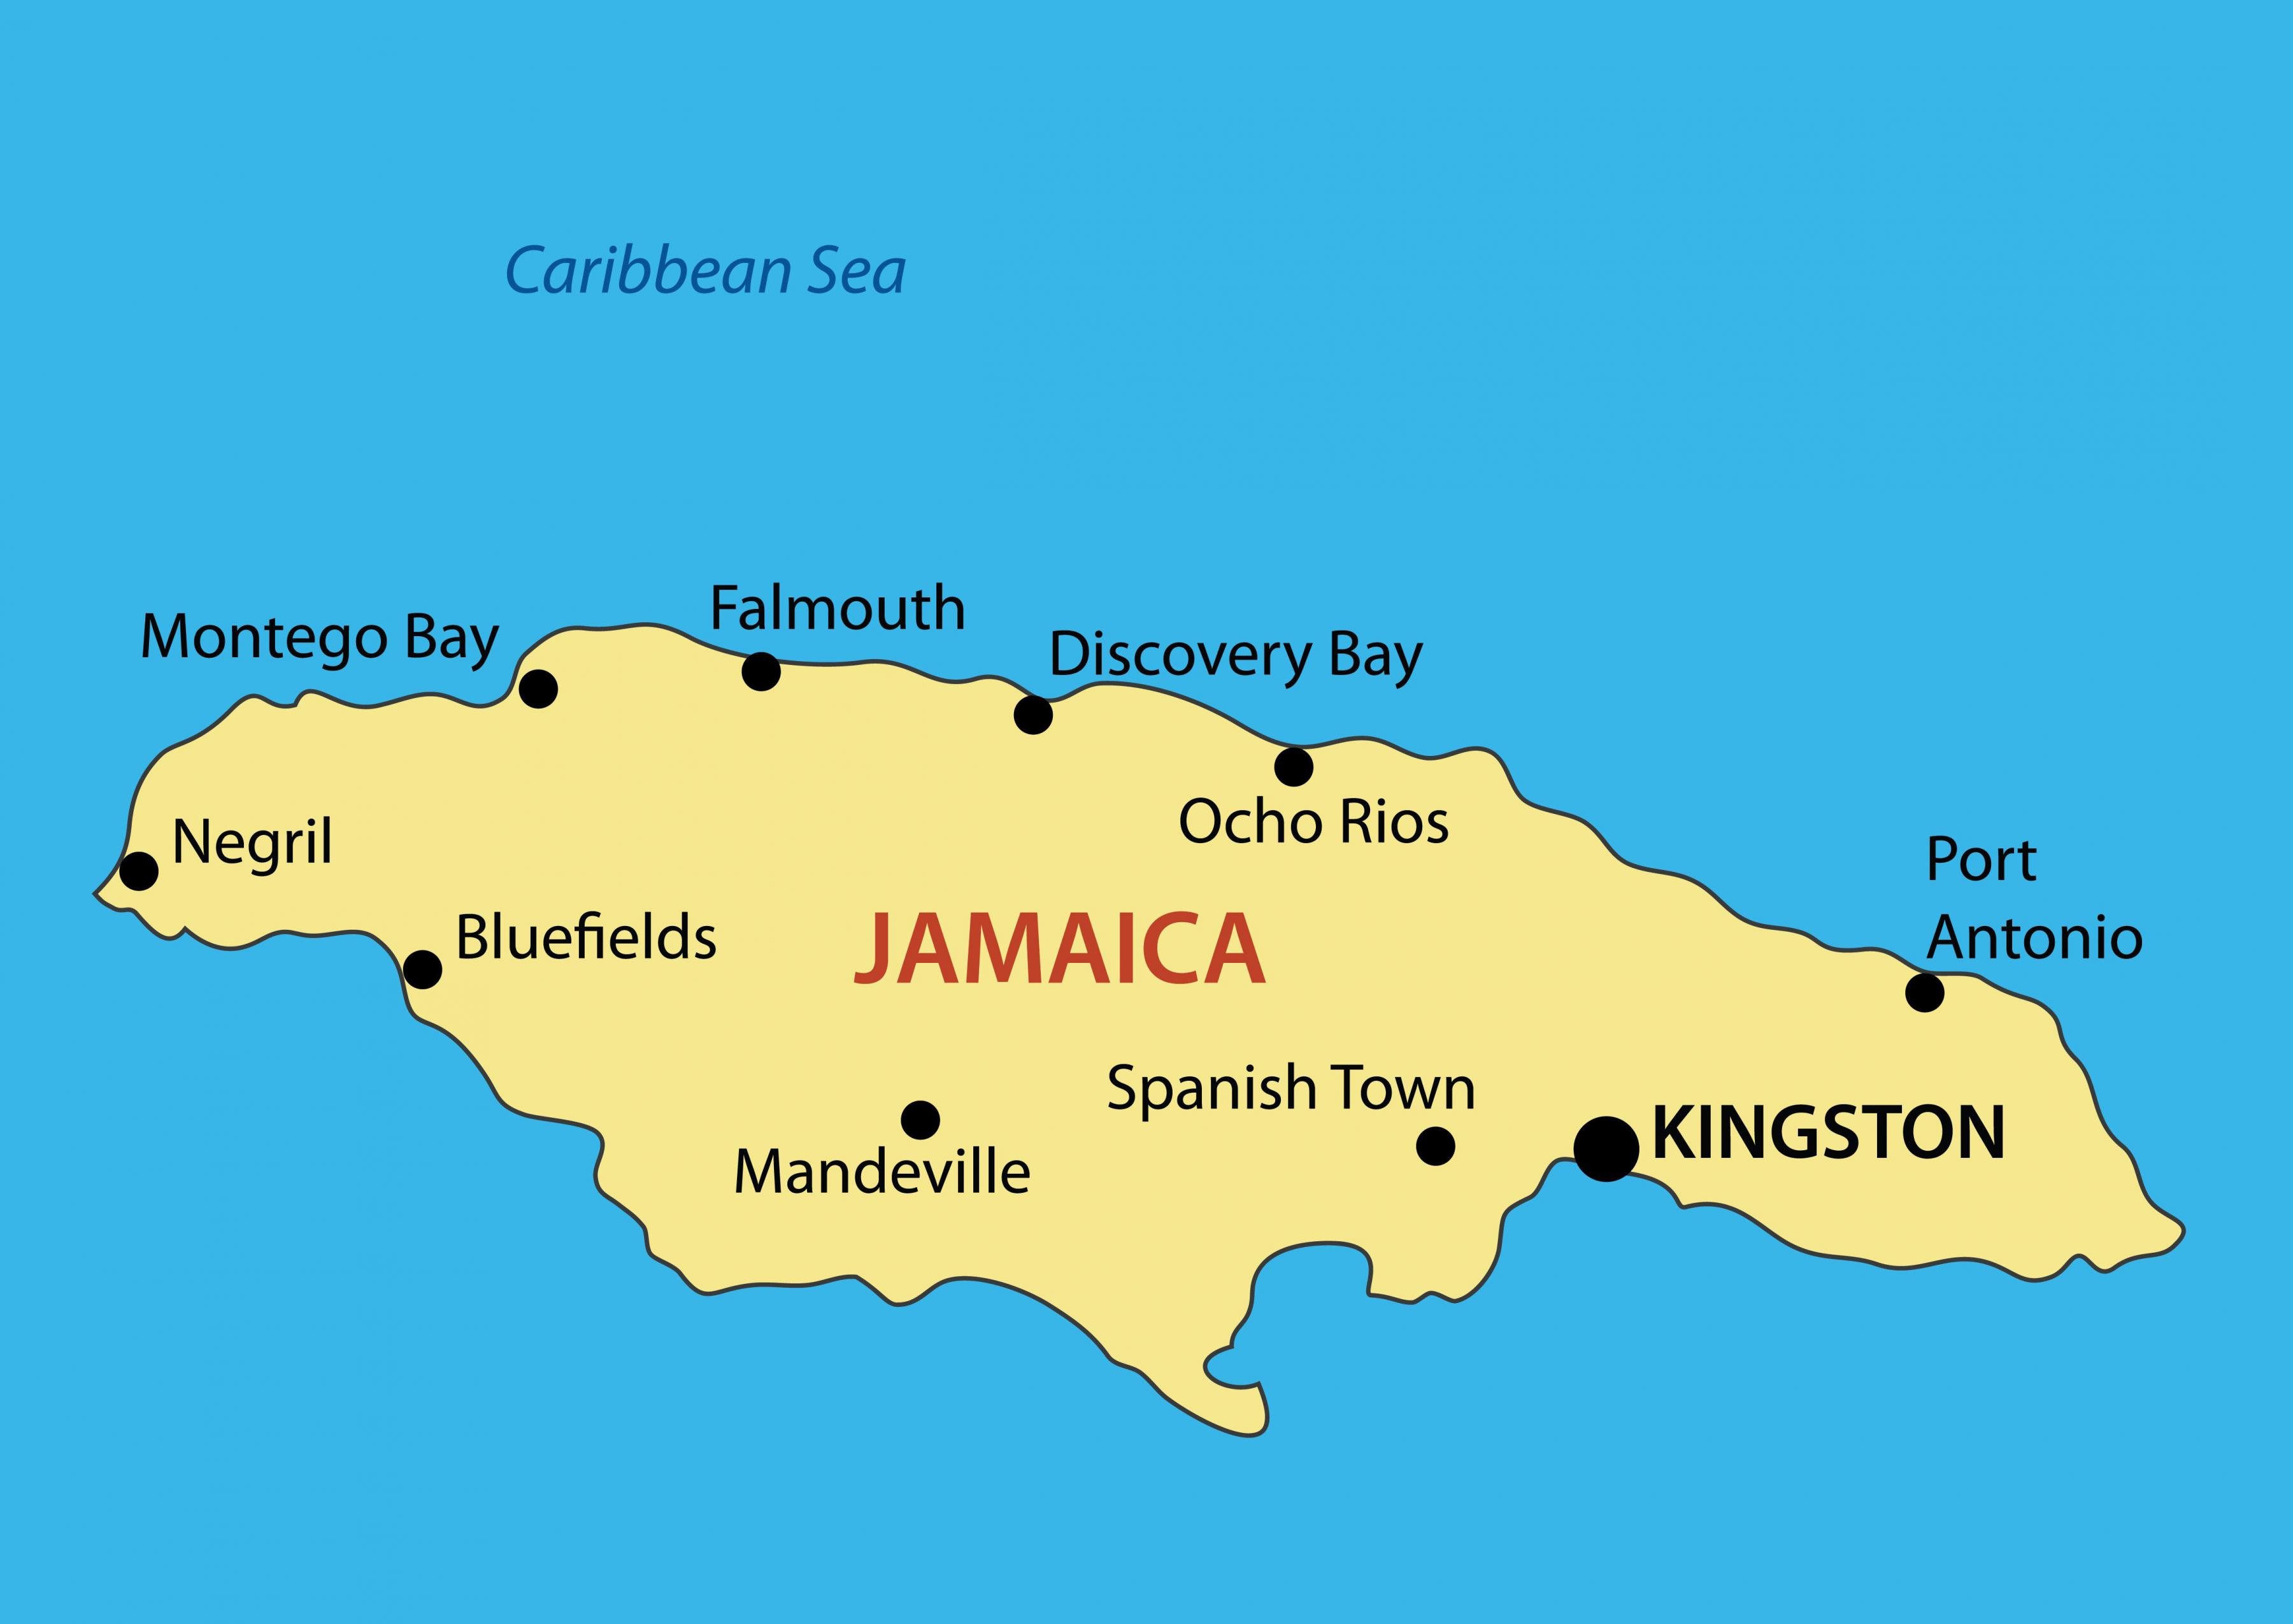 jamaica-k-l-nleges-s-csod-latos-helyei-pr-cikkek